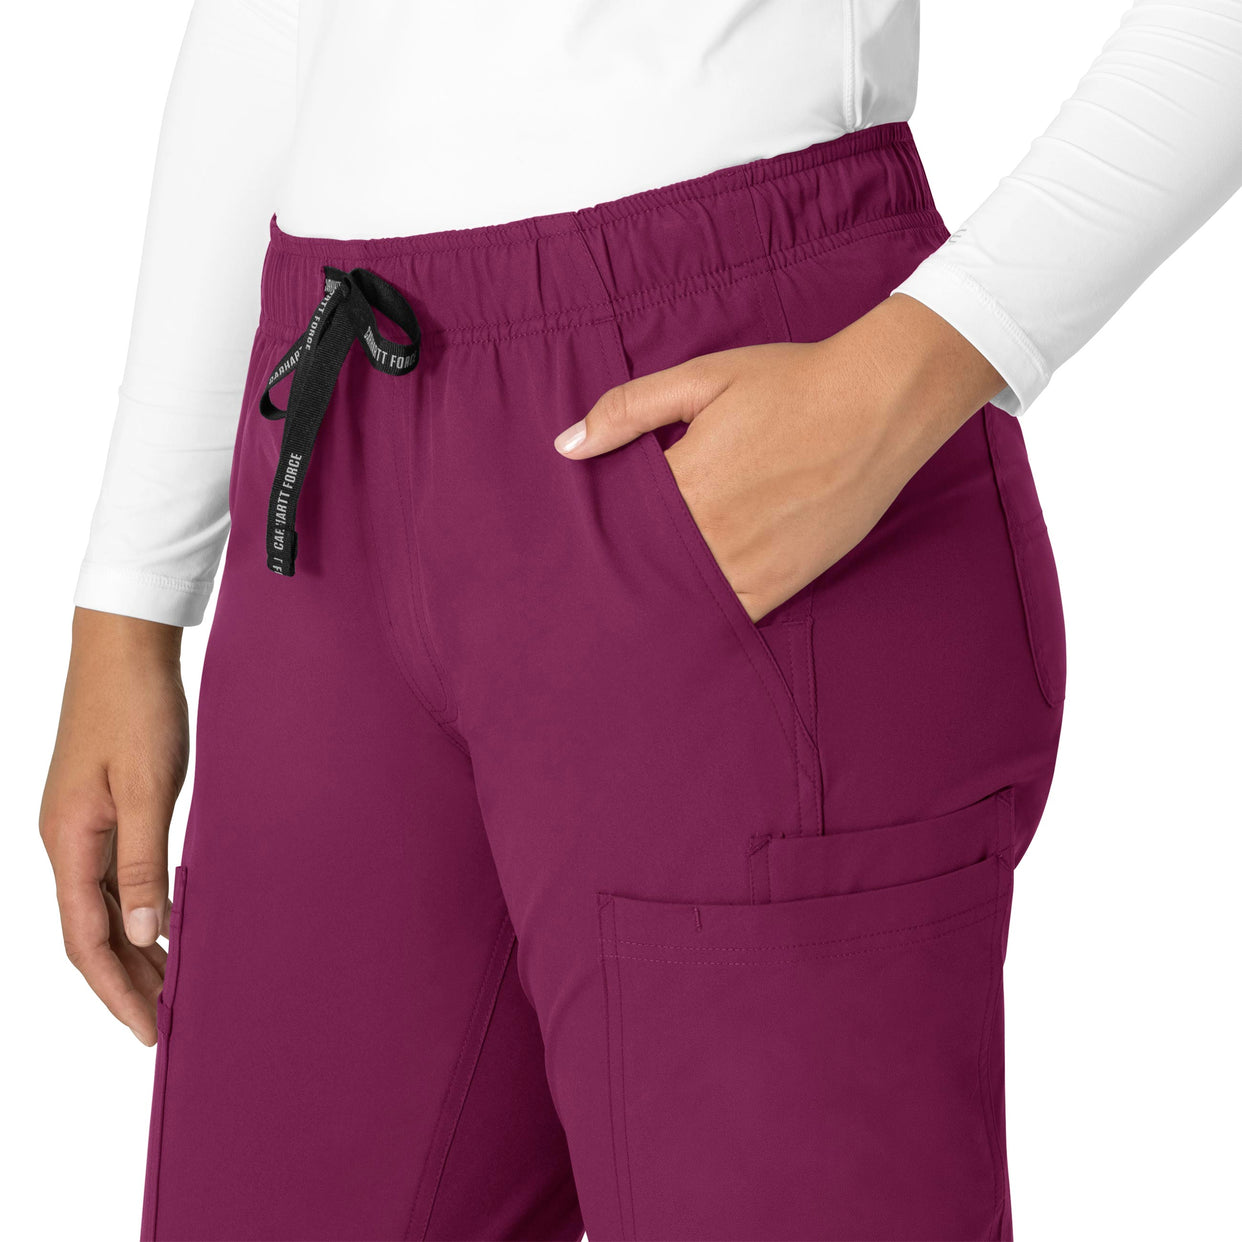 Force Essentials Women's Straight Leg Scrub Pant Wine side detail 1